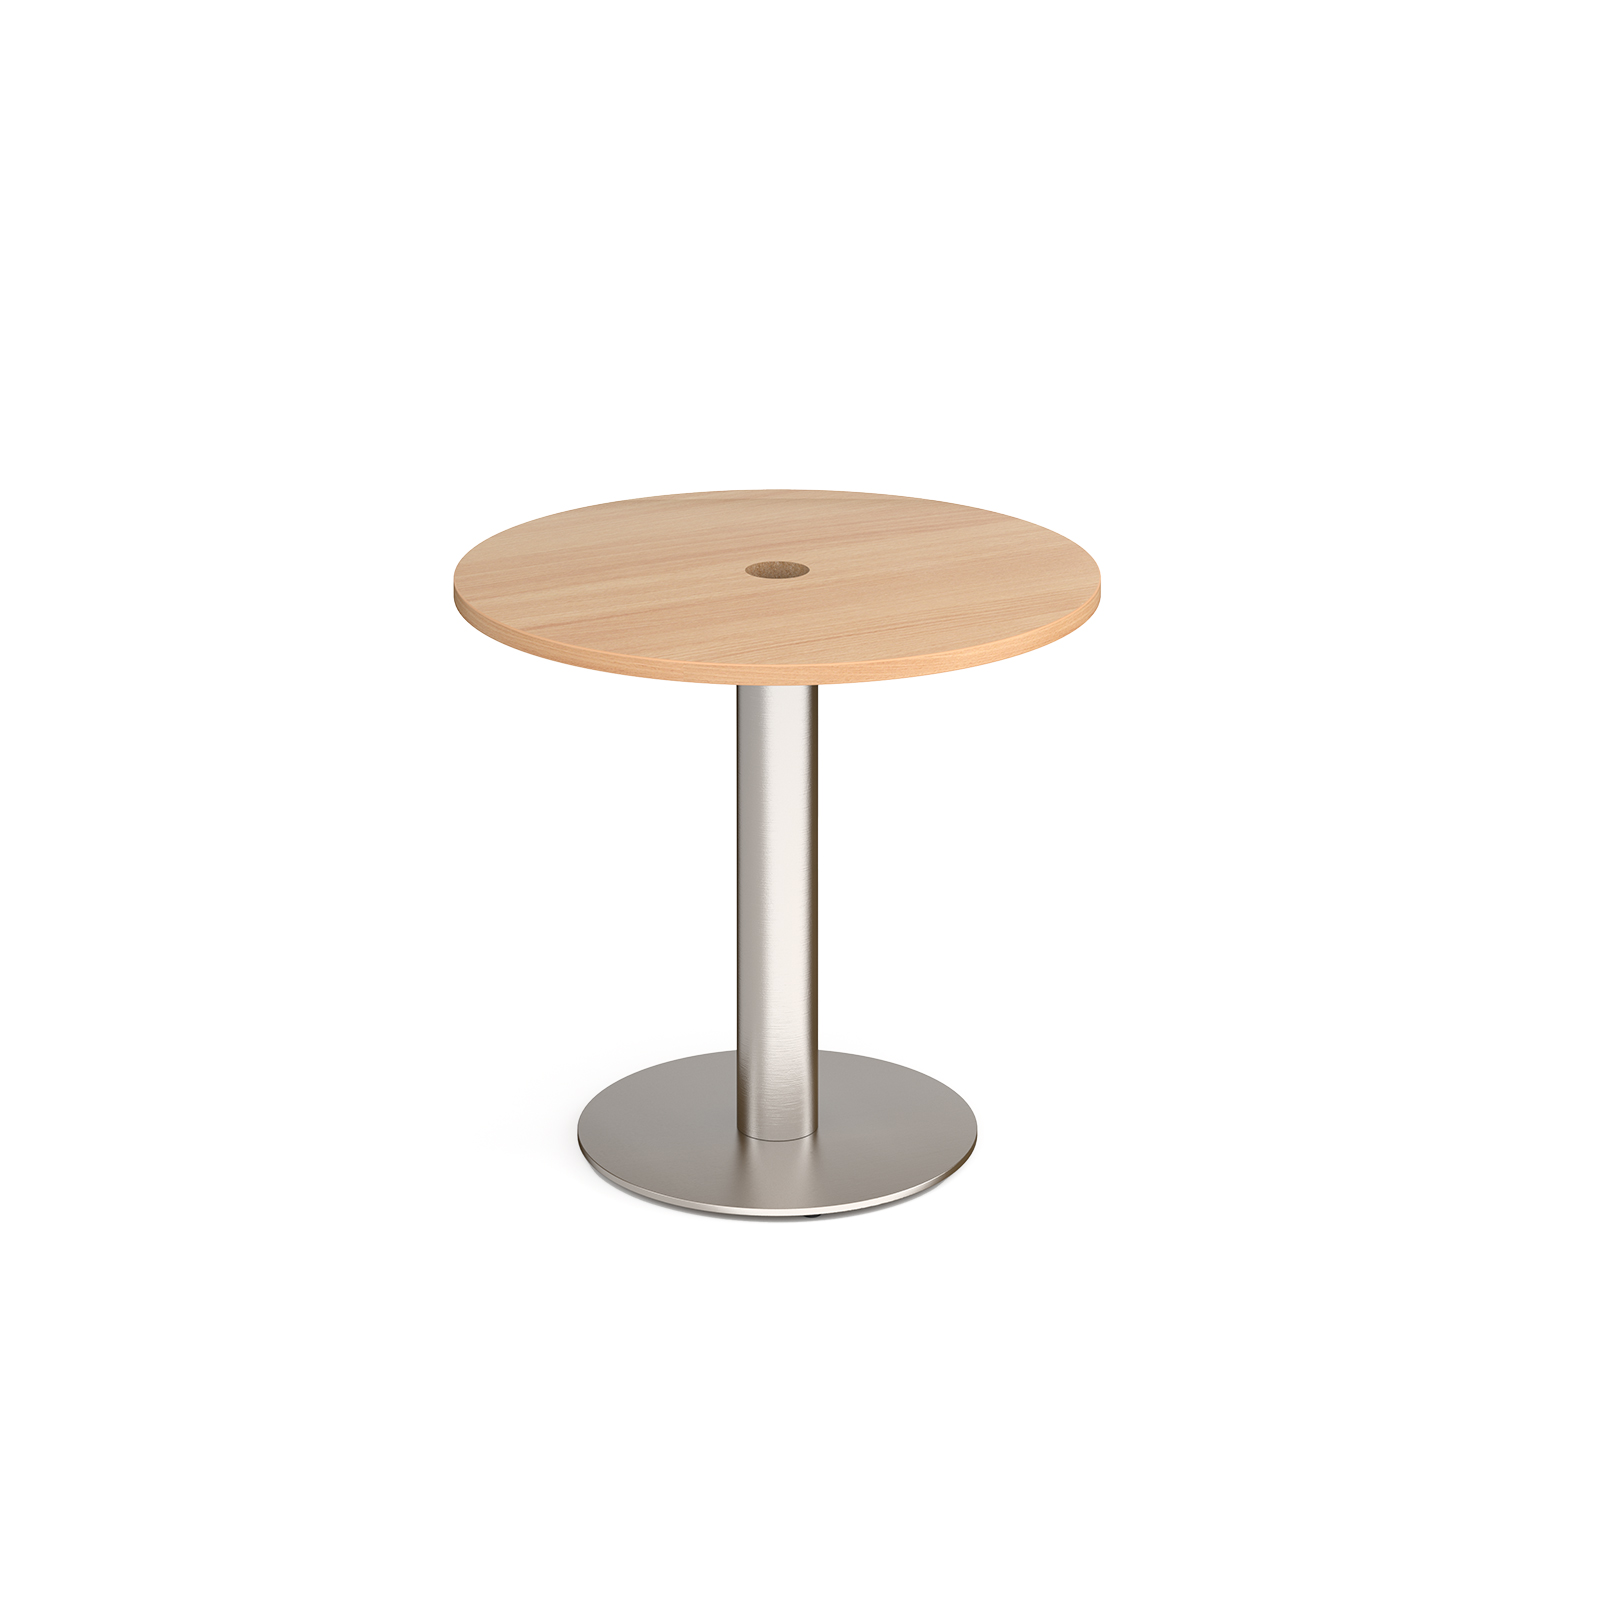 Monza circular dining table 800mm with central circular cutout 80mm - beech